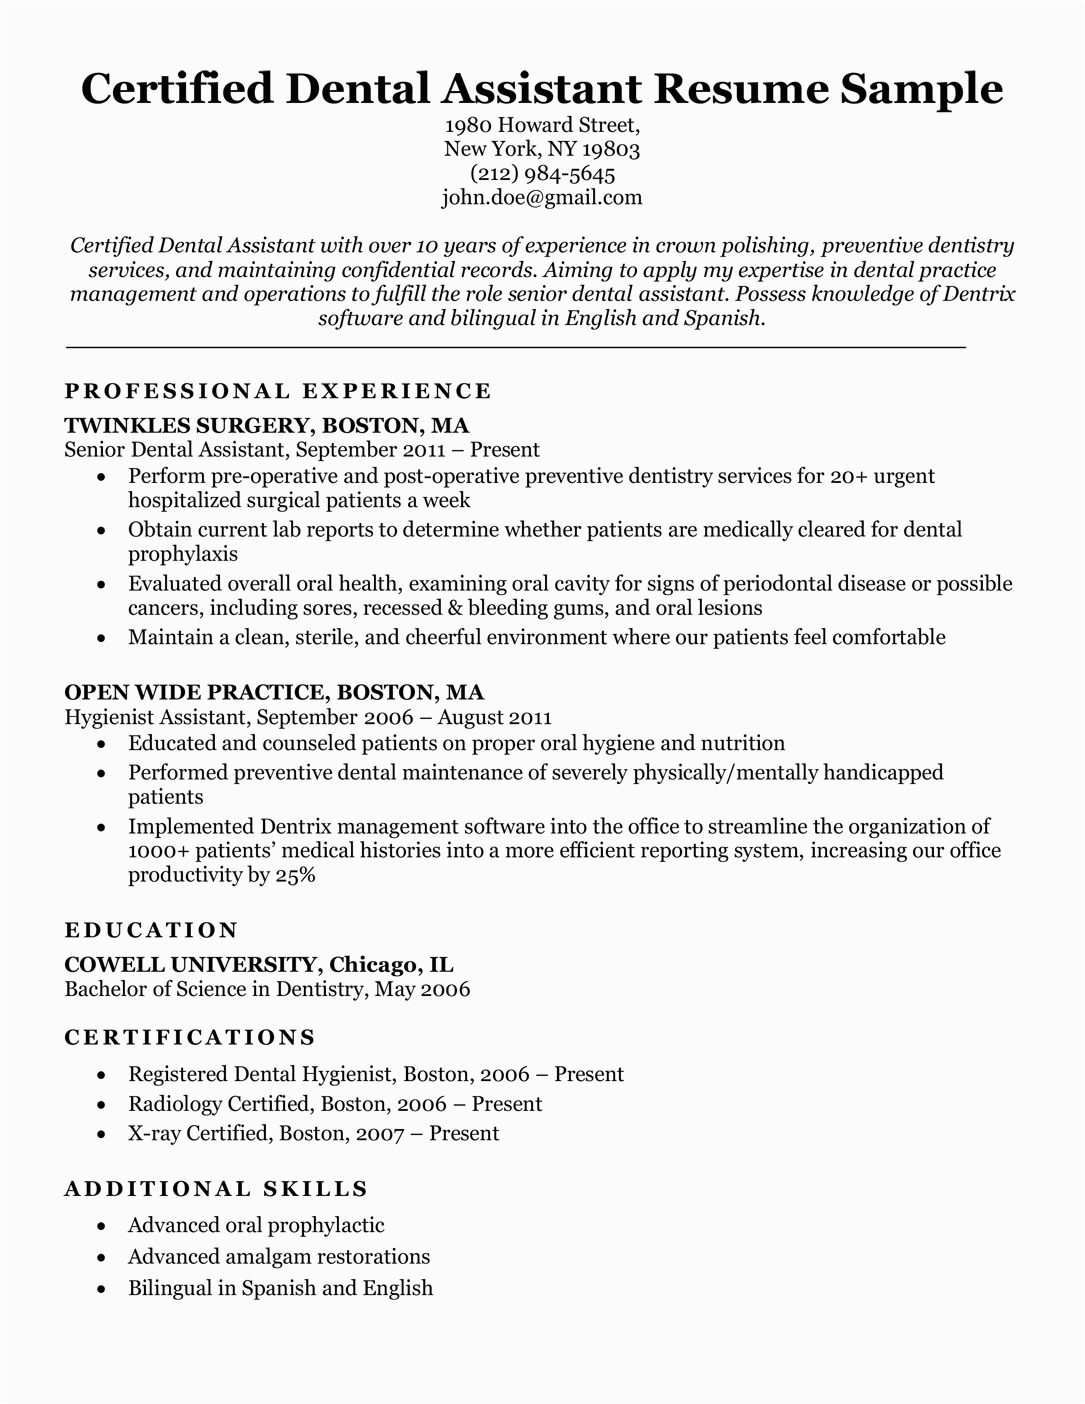 Sample Of Resume for Dental assistant Dental Resume Examples & Writing Tips